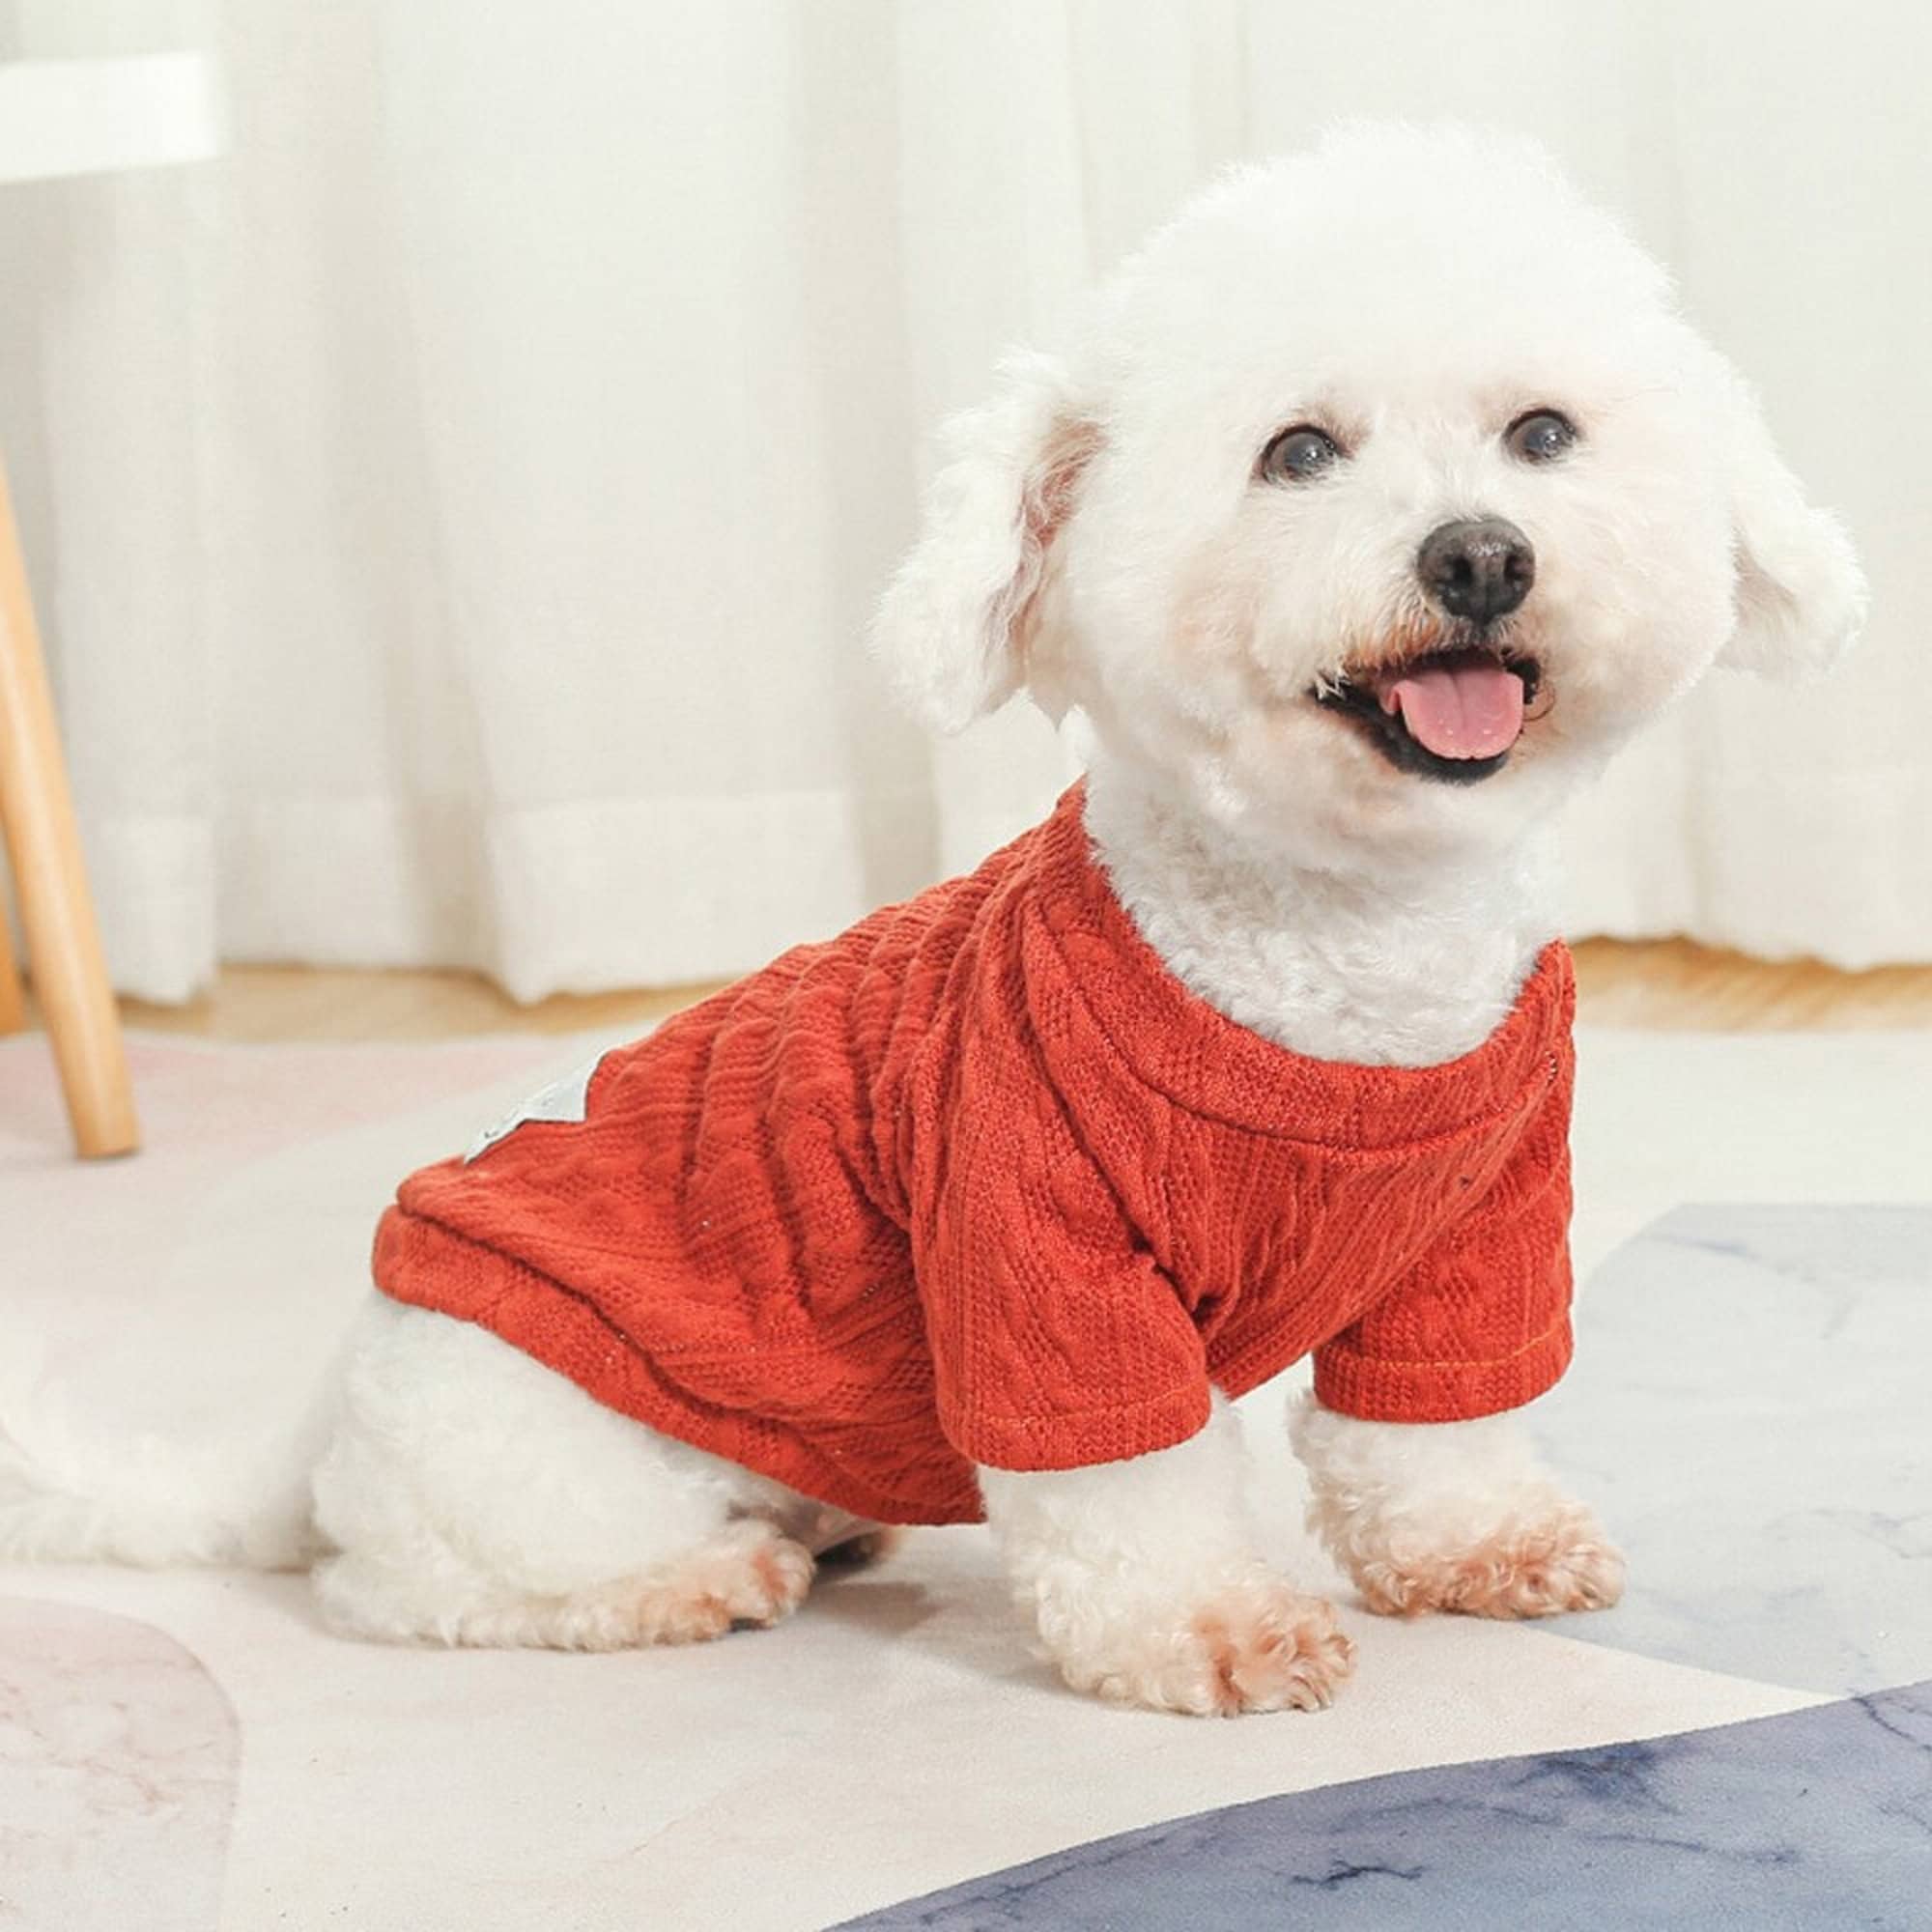 Wholesale Dog Basketball Team Pet Dog Jersey T-Shirt Clothing